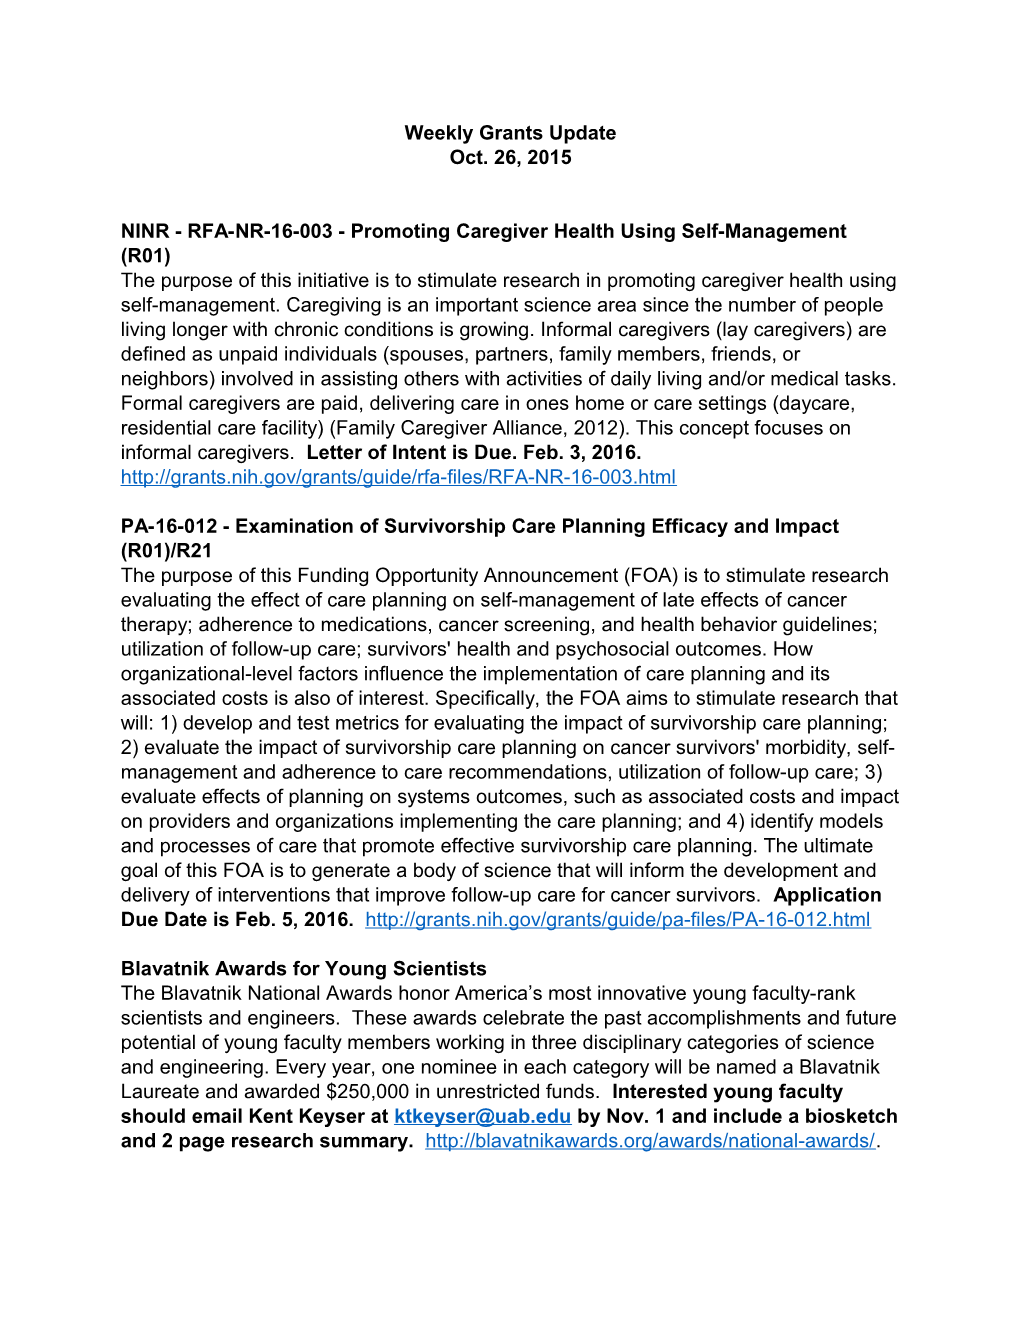 NINR - RFA-NR-16-003 - Promoting Caregiver Health Using Self-Management (R01)